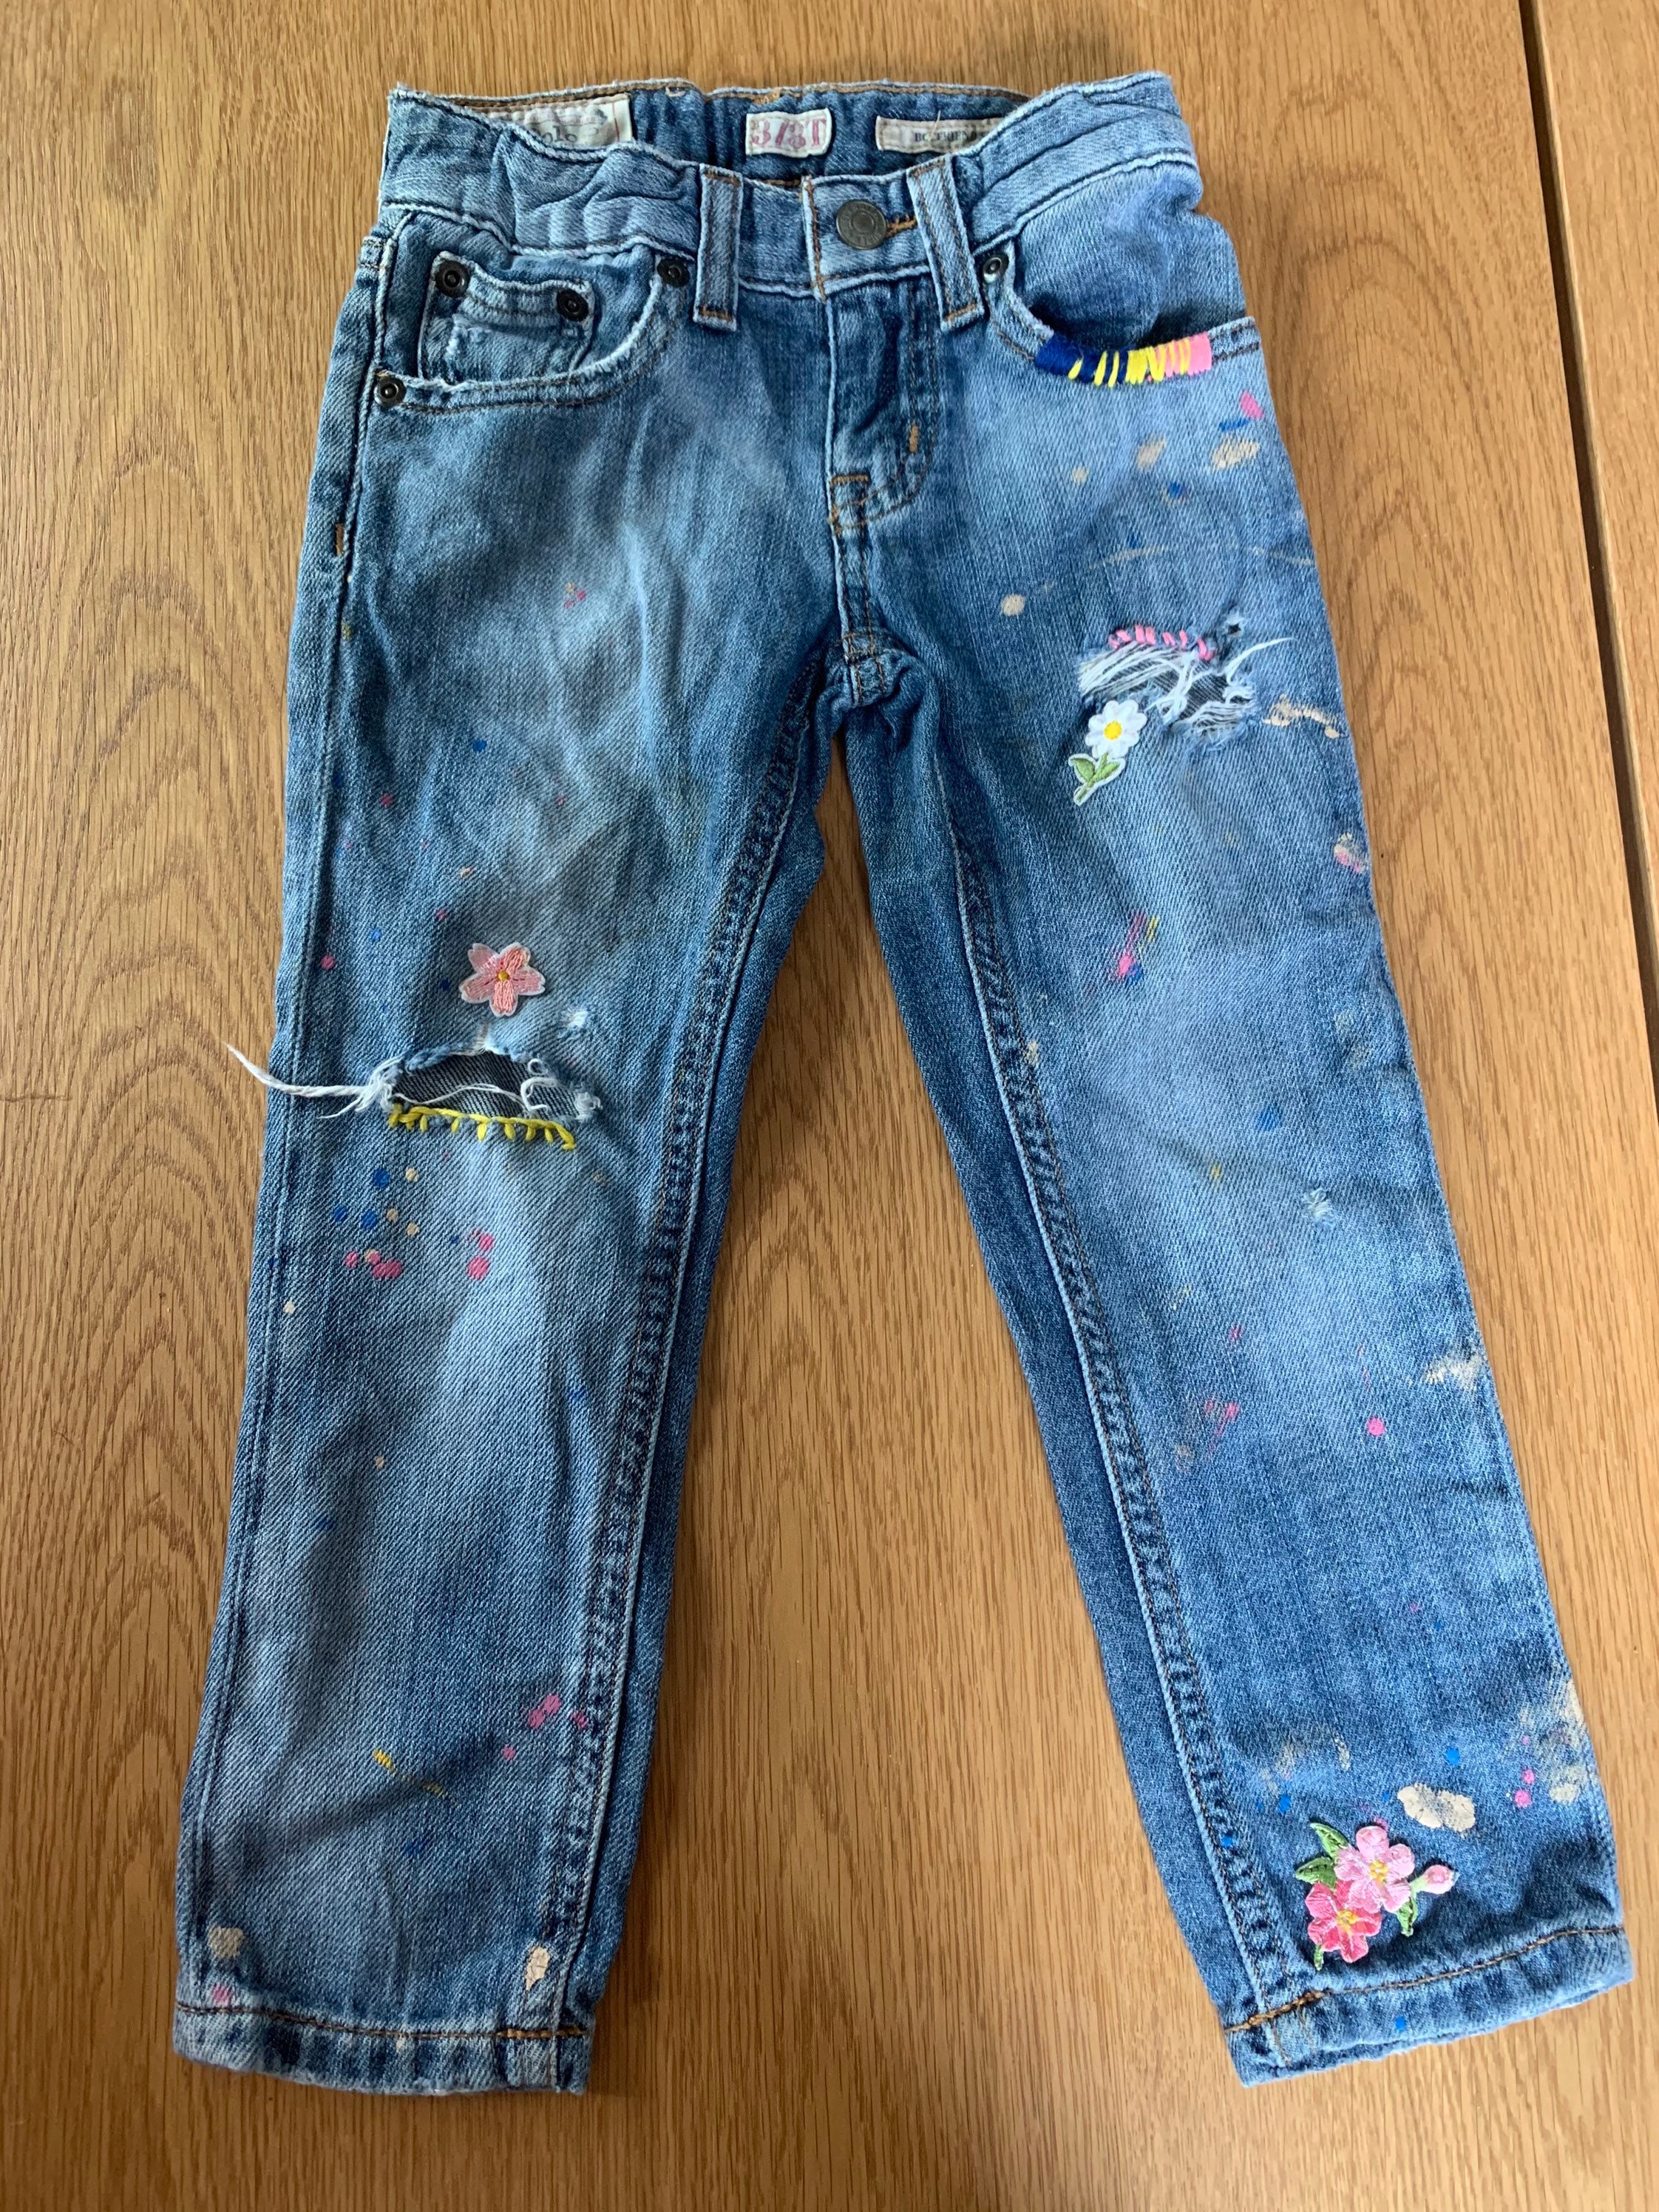 Polo Ralph Lauren Girls Toddler Girl Distressed Jeans Ripped Destroyed  Upcycled 3t Girls Denim Rips Paint Splatter Flower Embroidery Boho 